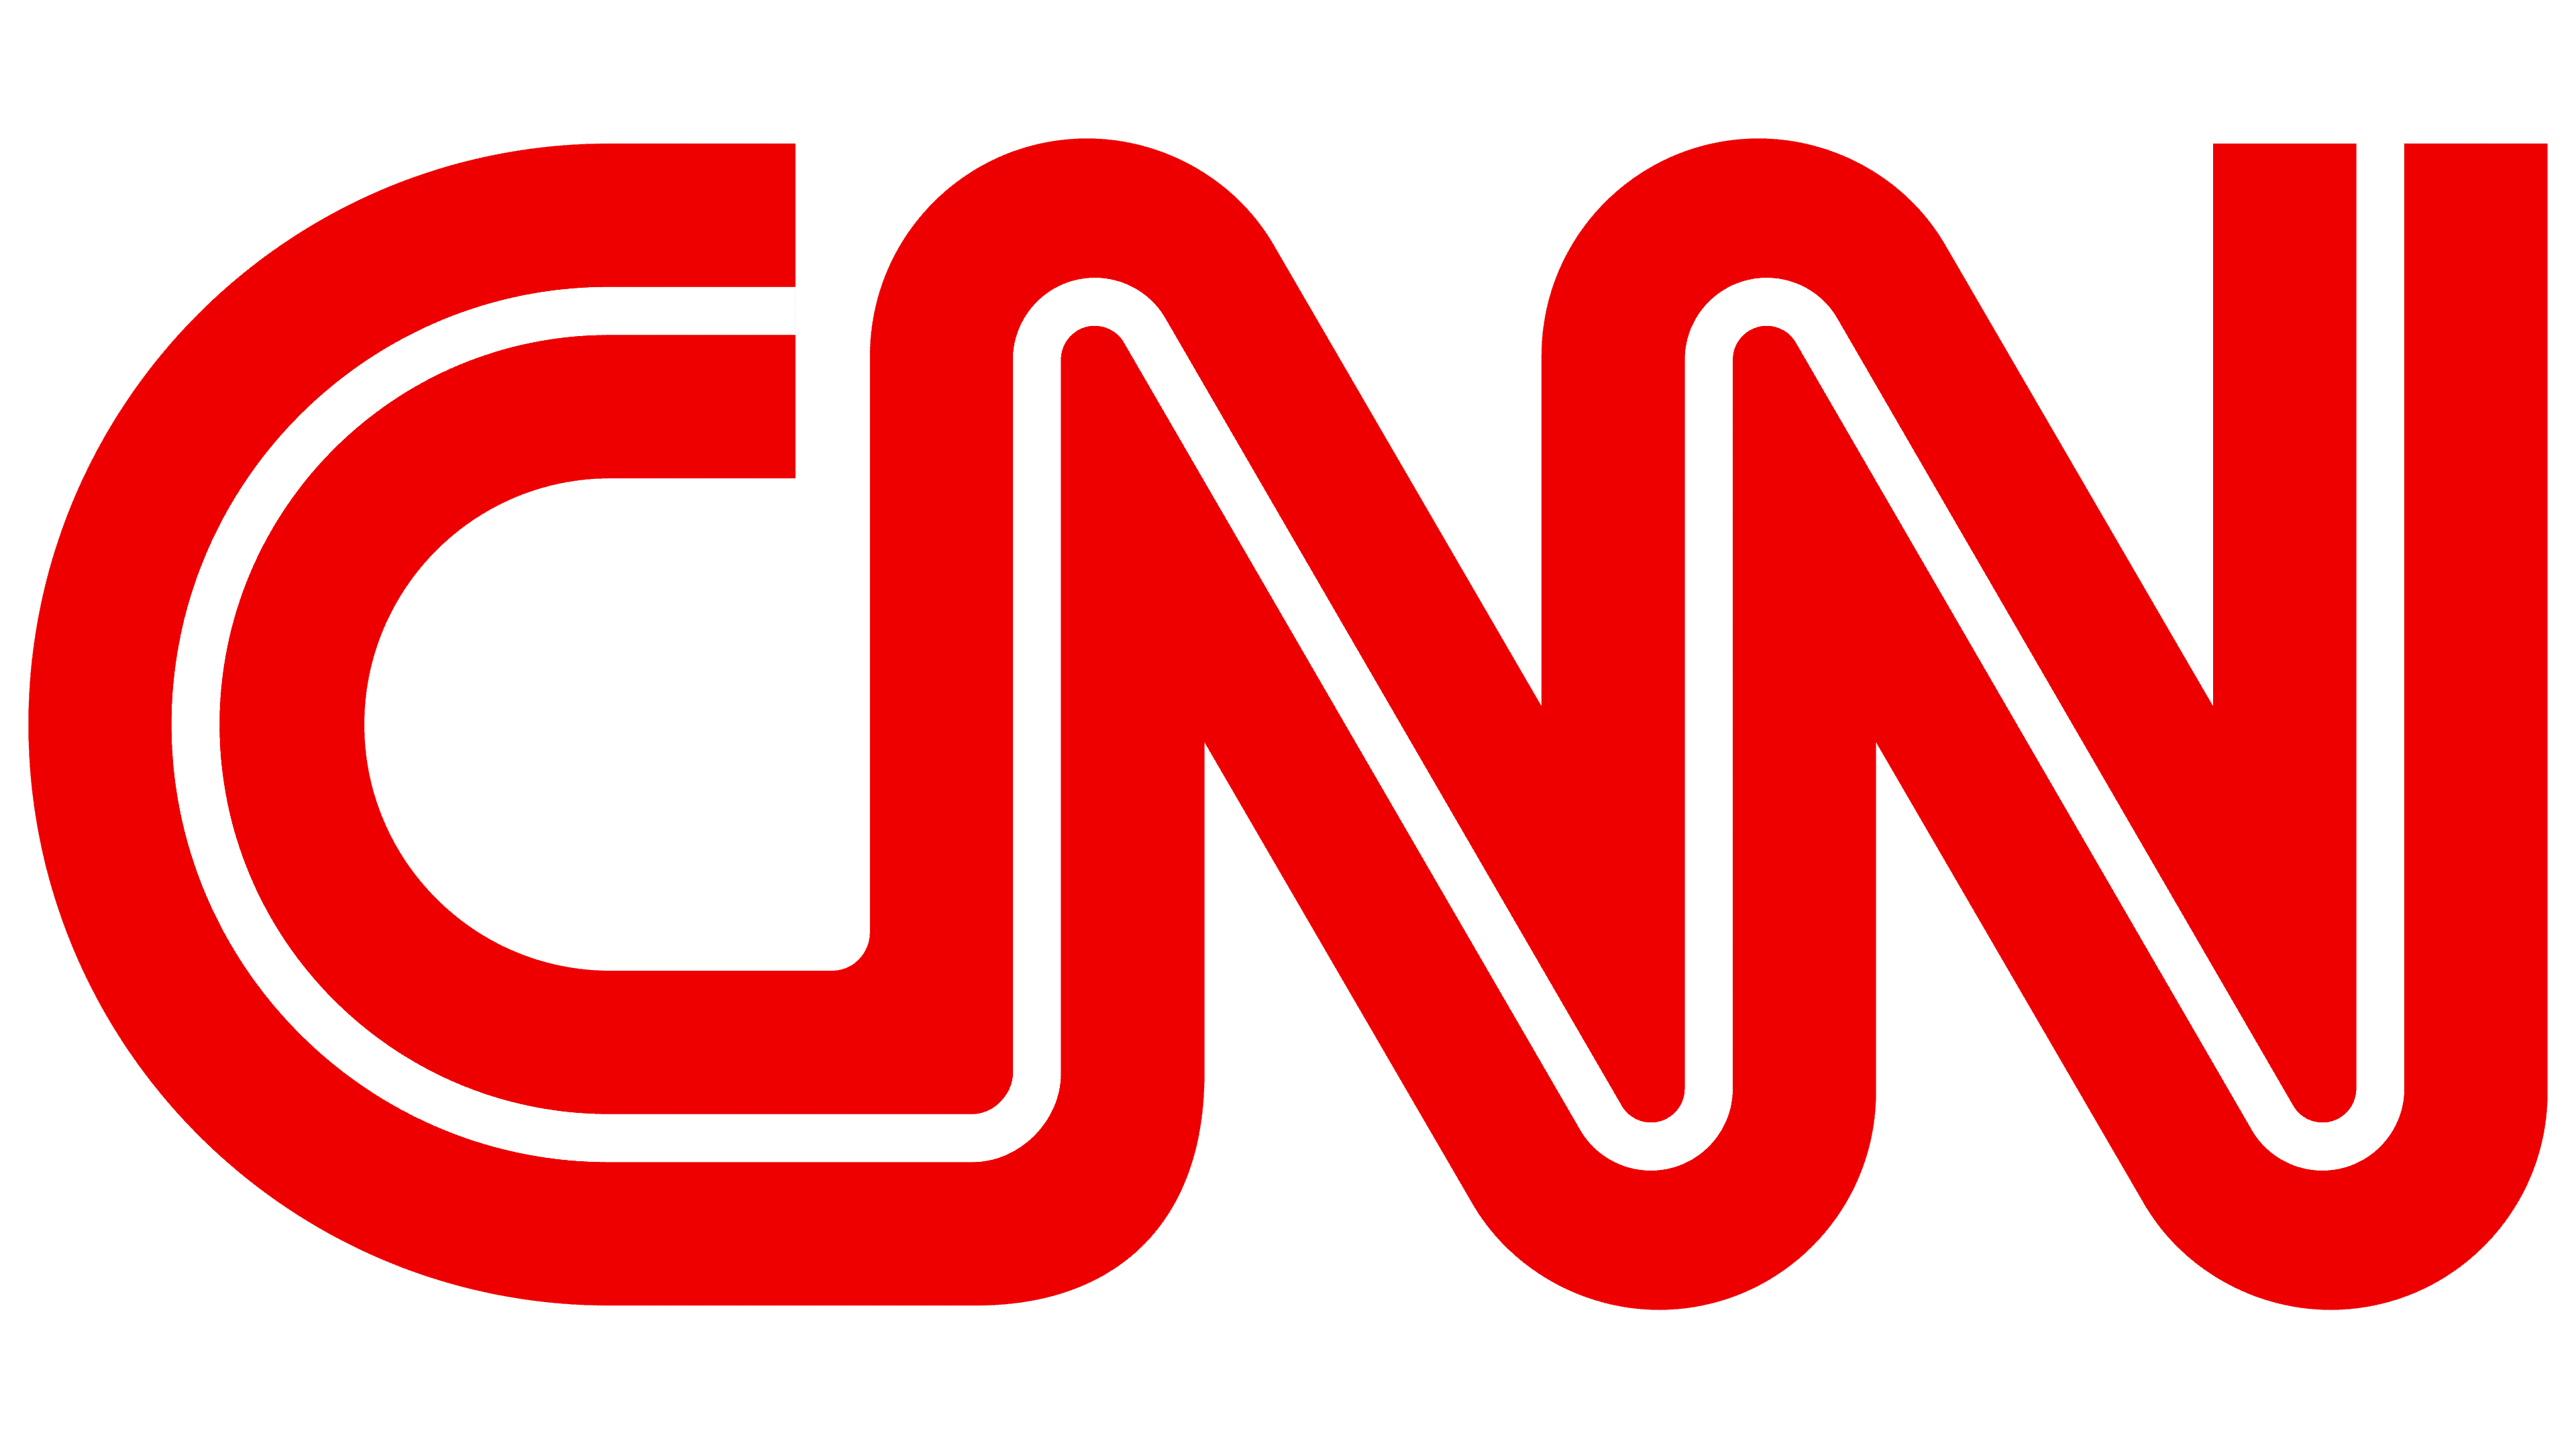 CNN Logo Logo